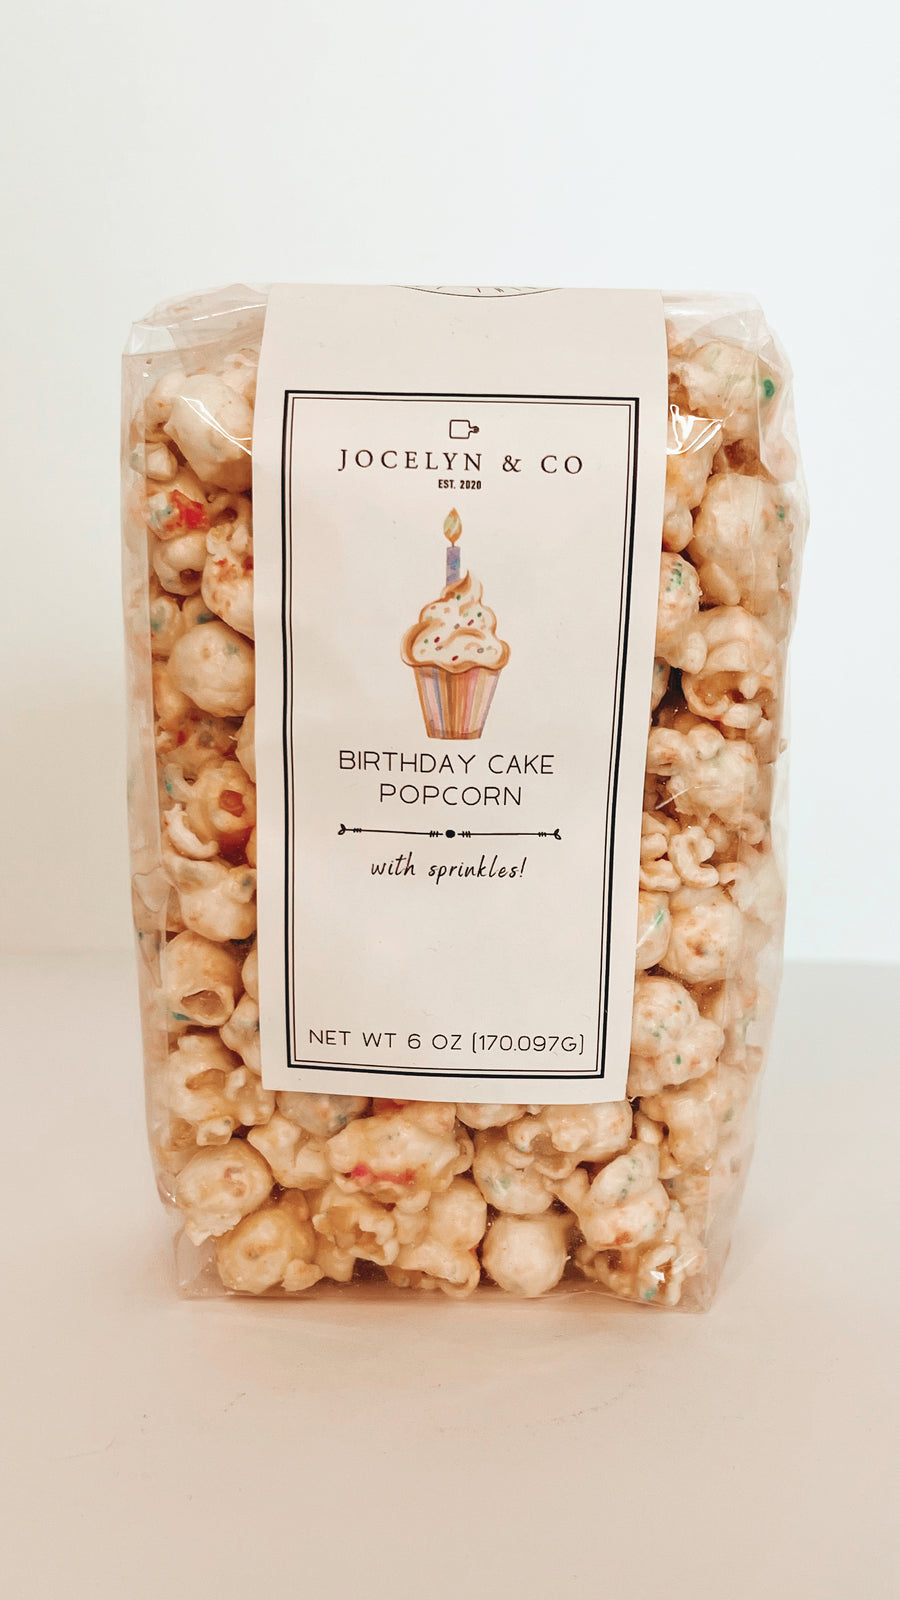 Jocelyn & C0 - Birthday Cake Popcorn